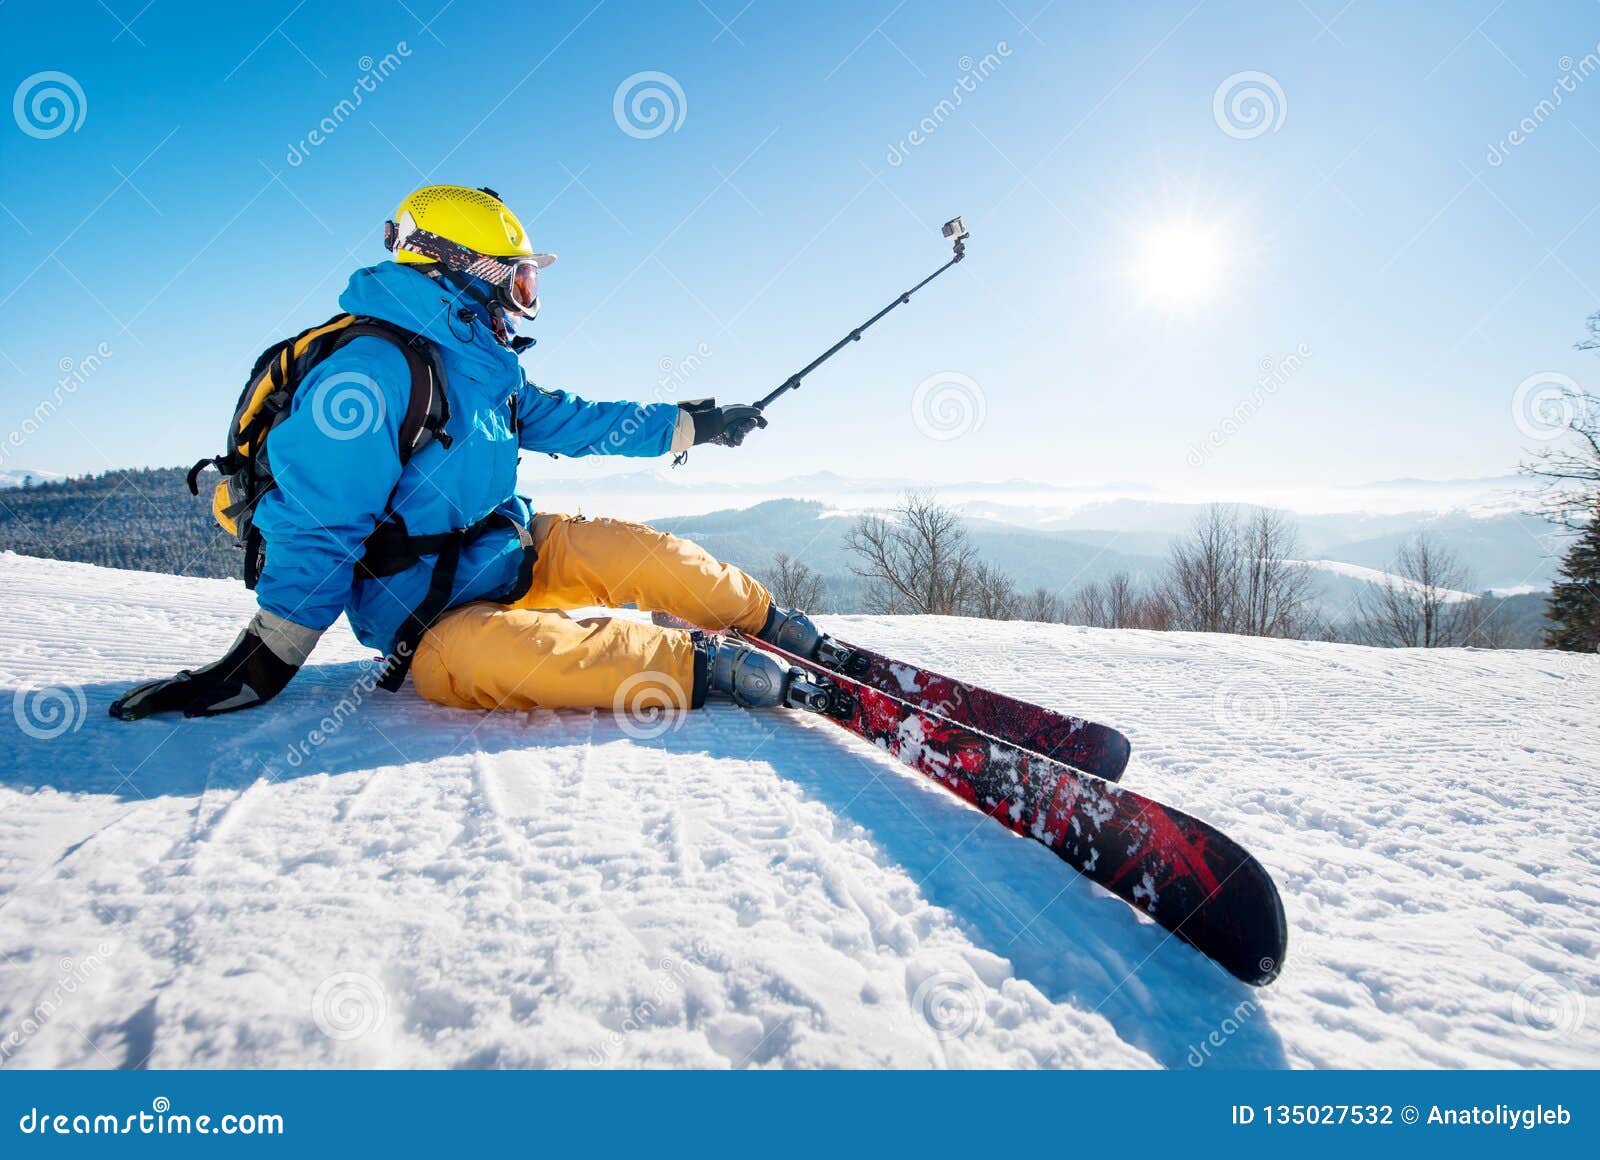 Shot of a Skier Sitting on the Ski Slope Taking a Selfie Using Selfie ...